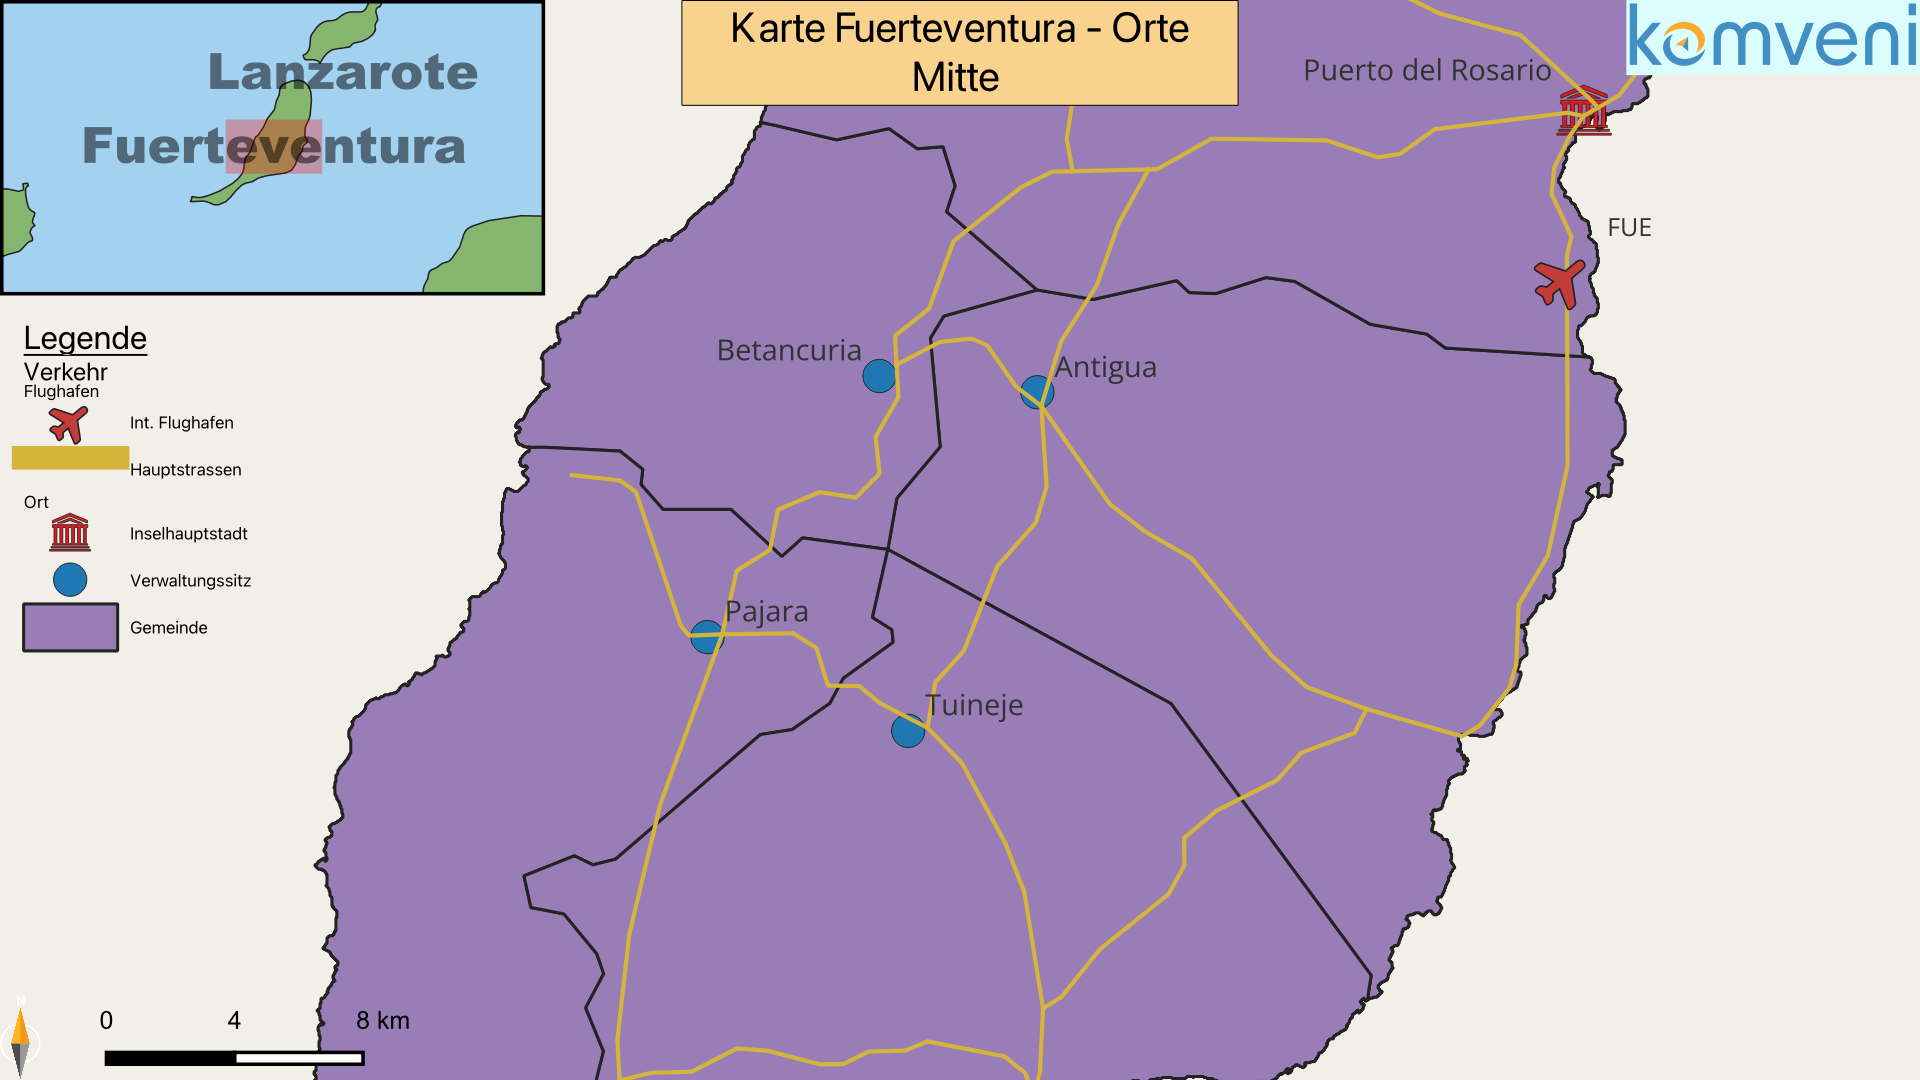 Karte Fuerteventura Orte Mitte